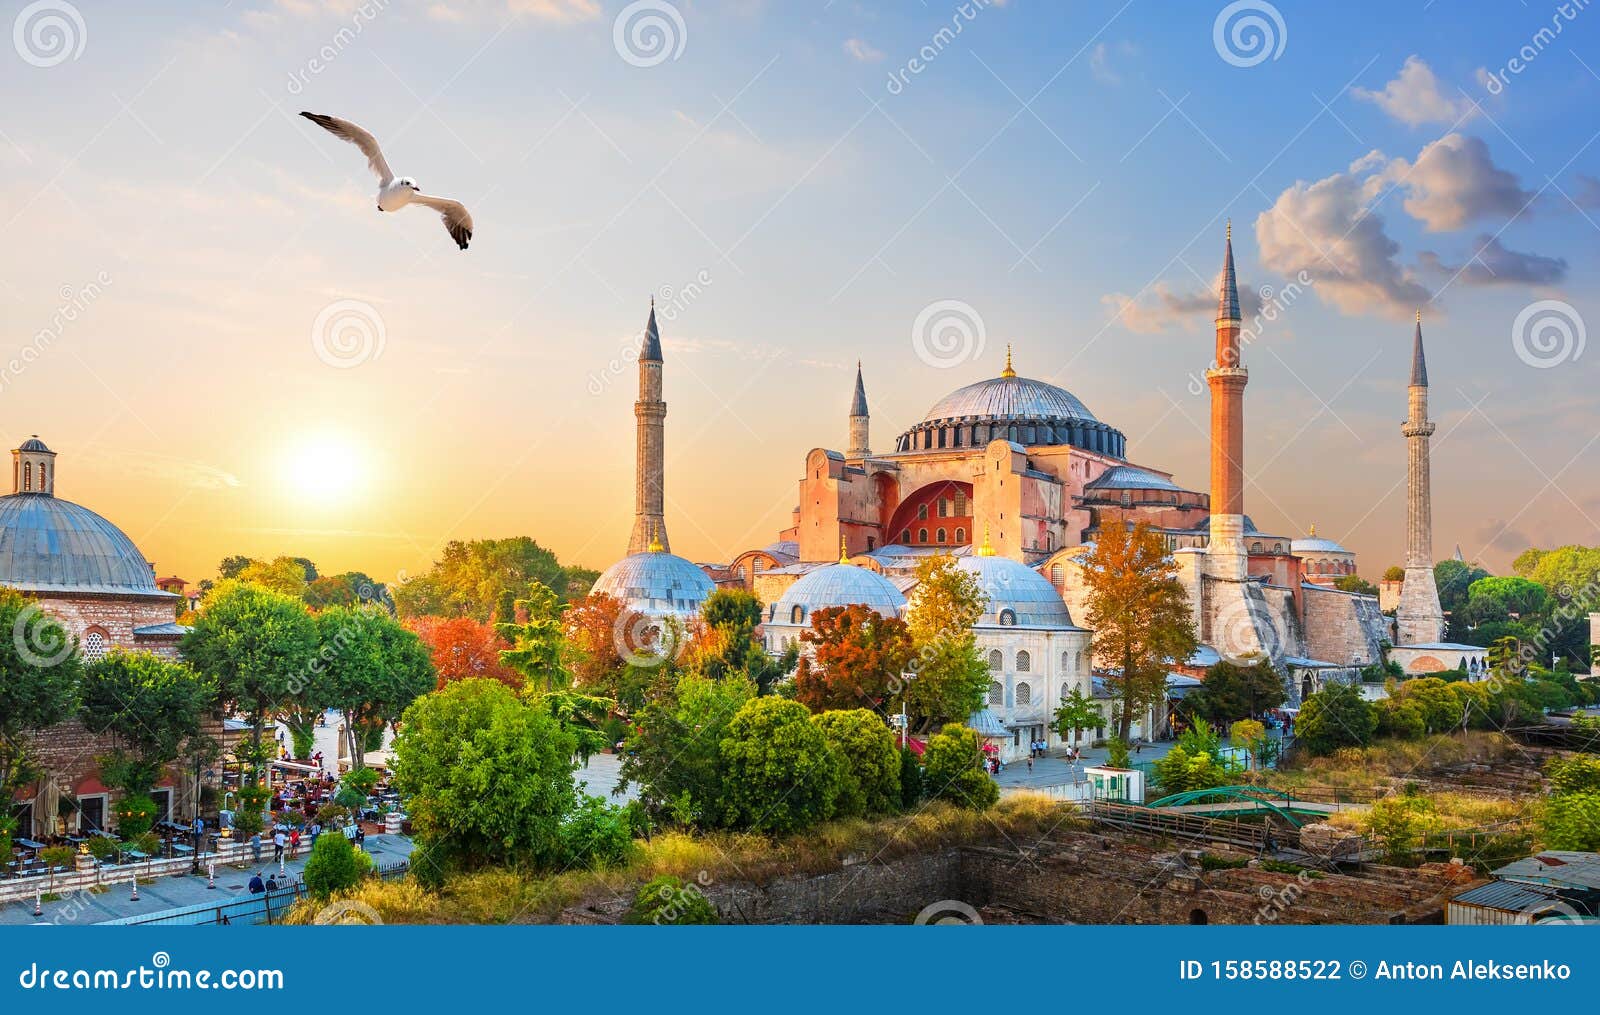 famous hagia sophia in the evening sun rays, istanbul, turkey